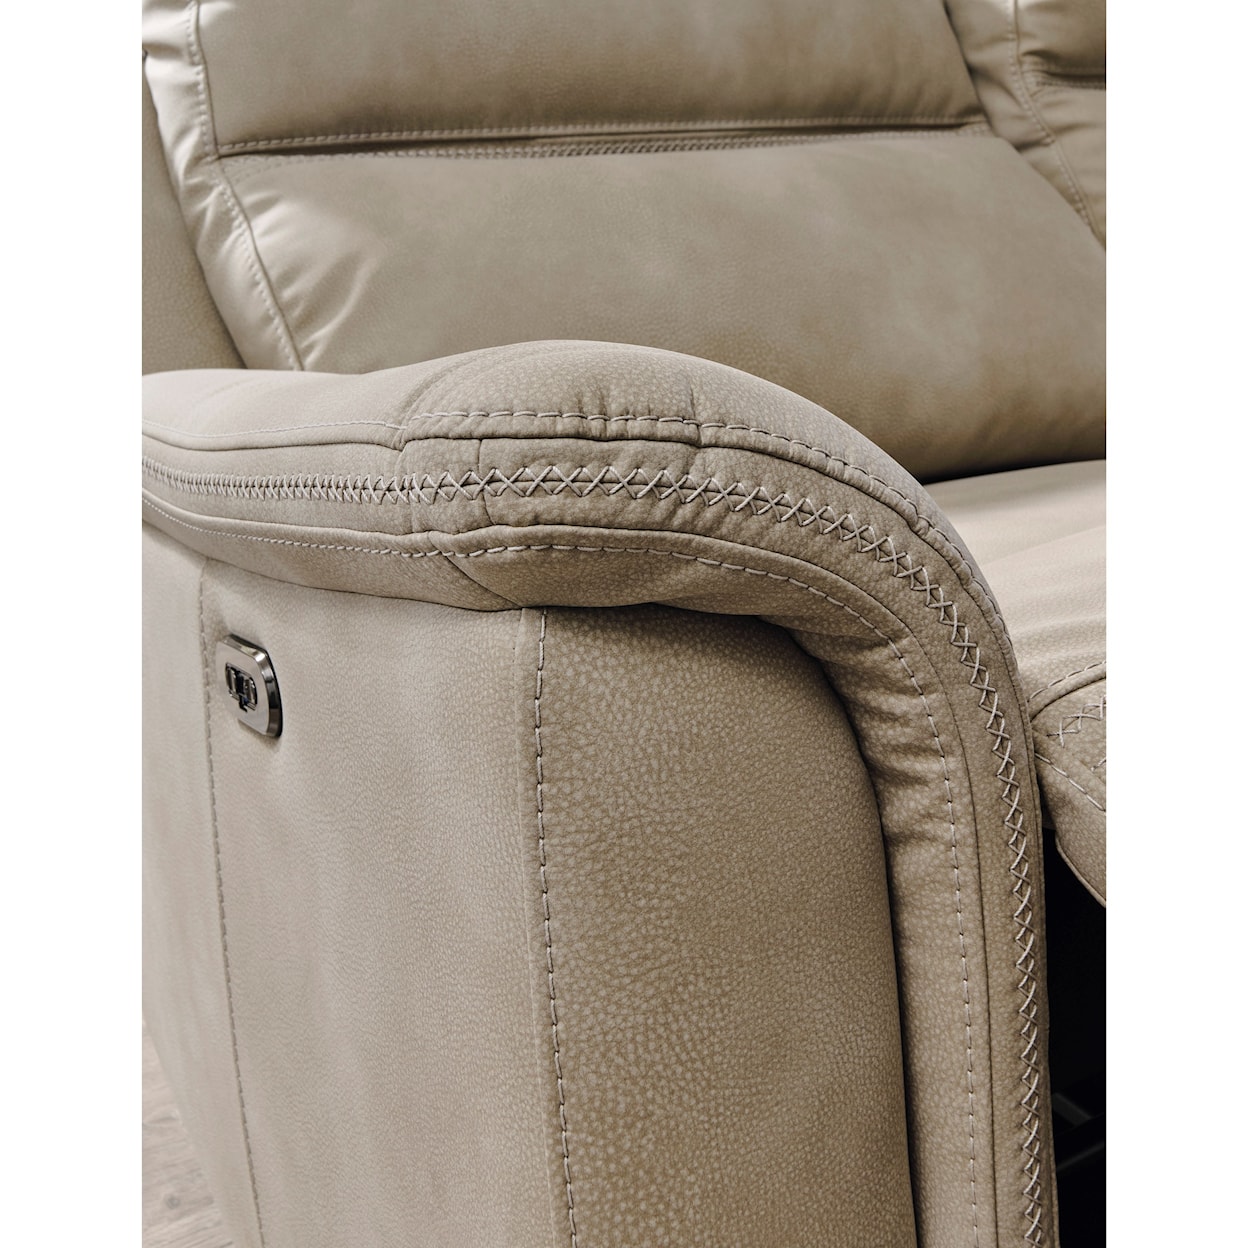 Belfort Select Next-Gen DuraPella 2-Seat Pwr Rec Sofa  w/ Adj Headrests